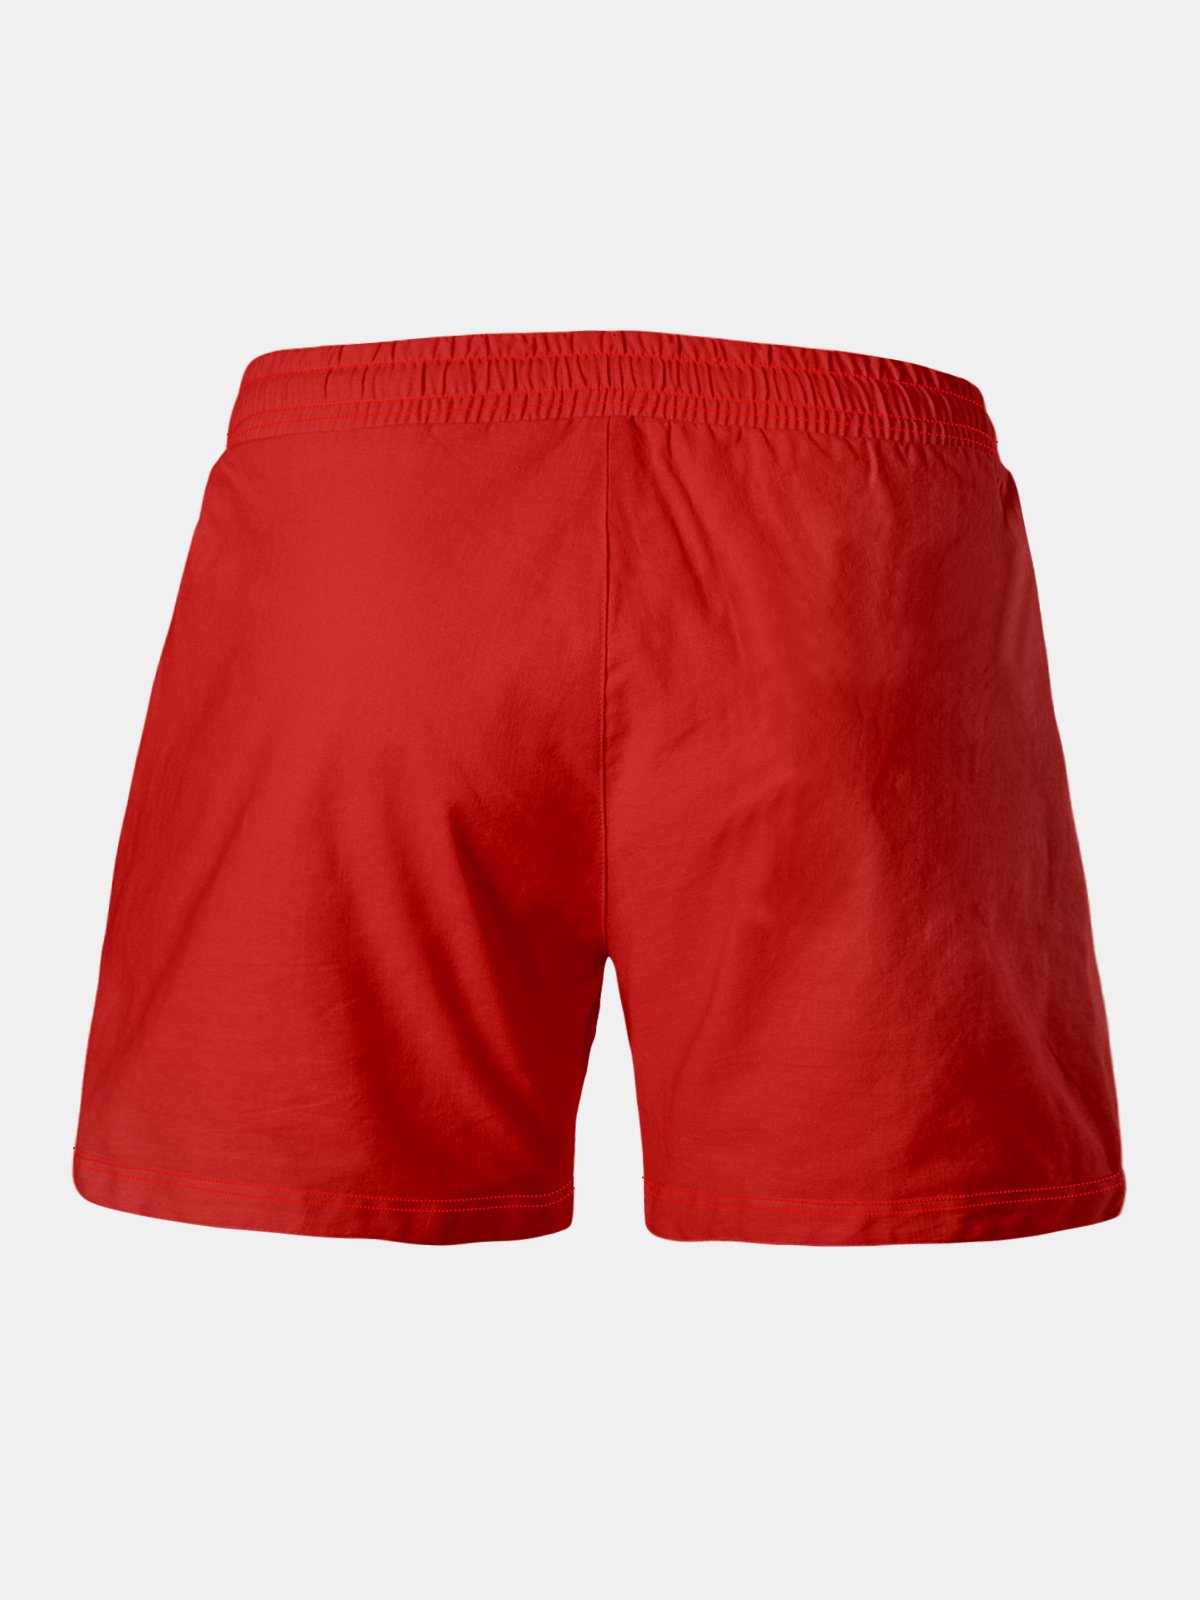 Mama Bear Men's Beach Shorts